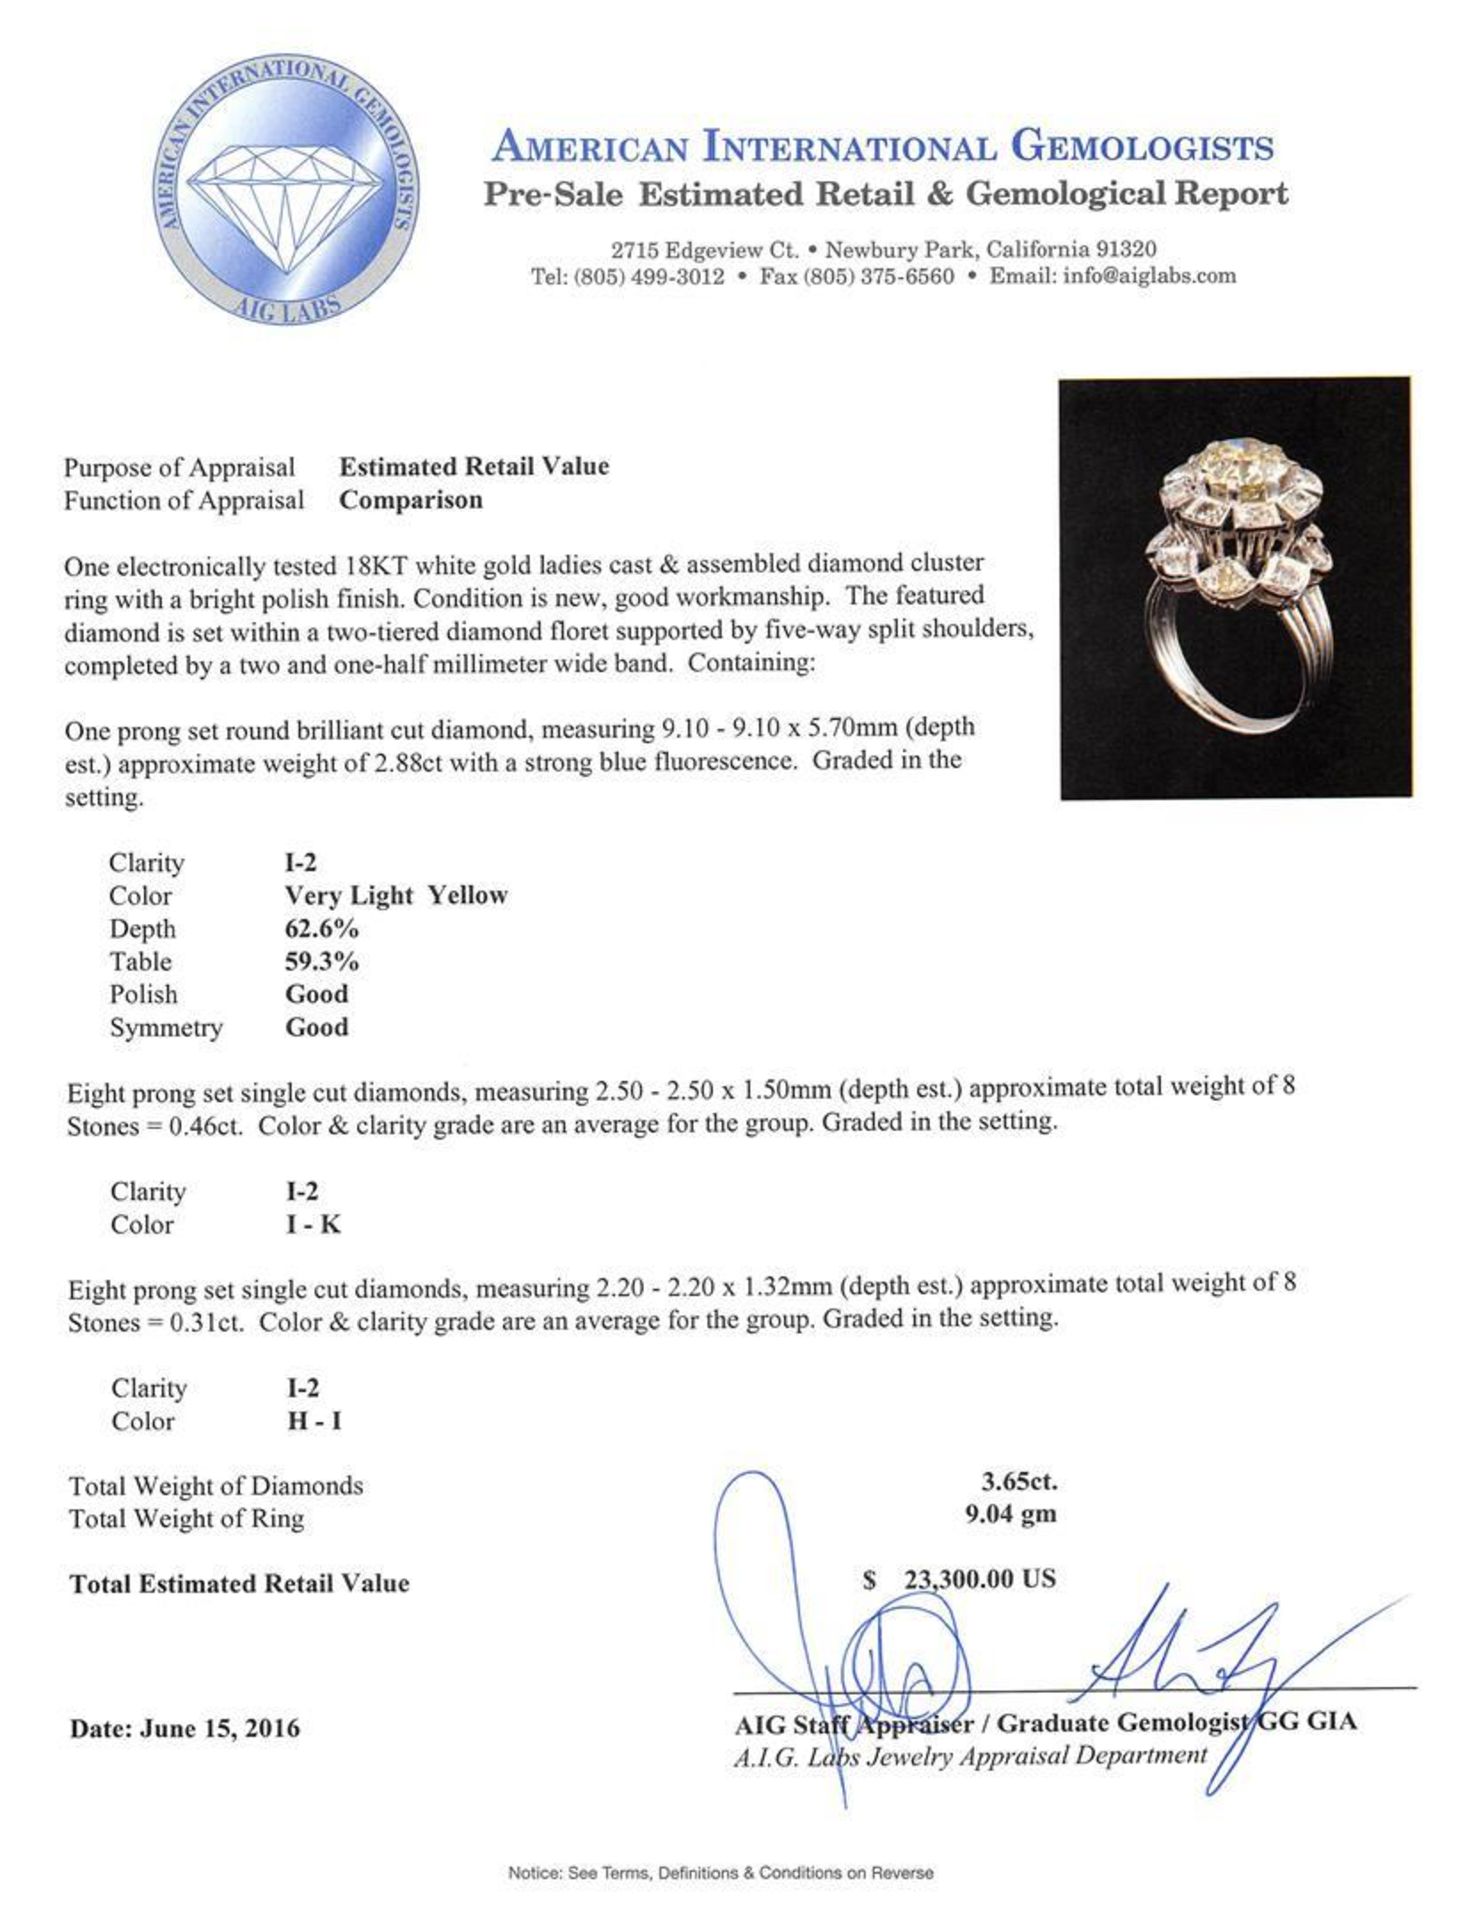 3.65 ctw Diamond Ring - 18KT White Gold - Image 5 of 5